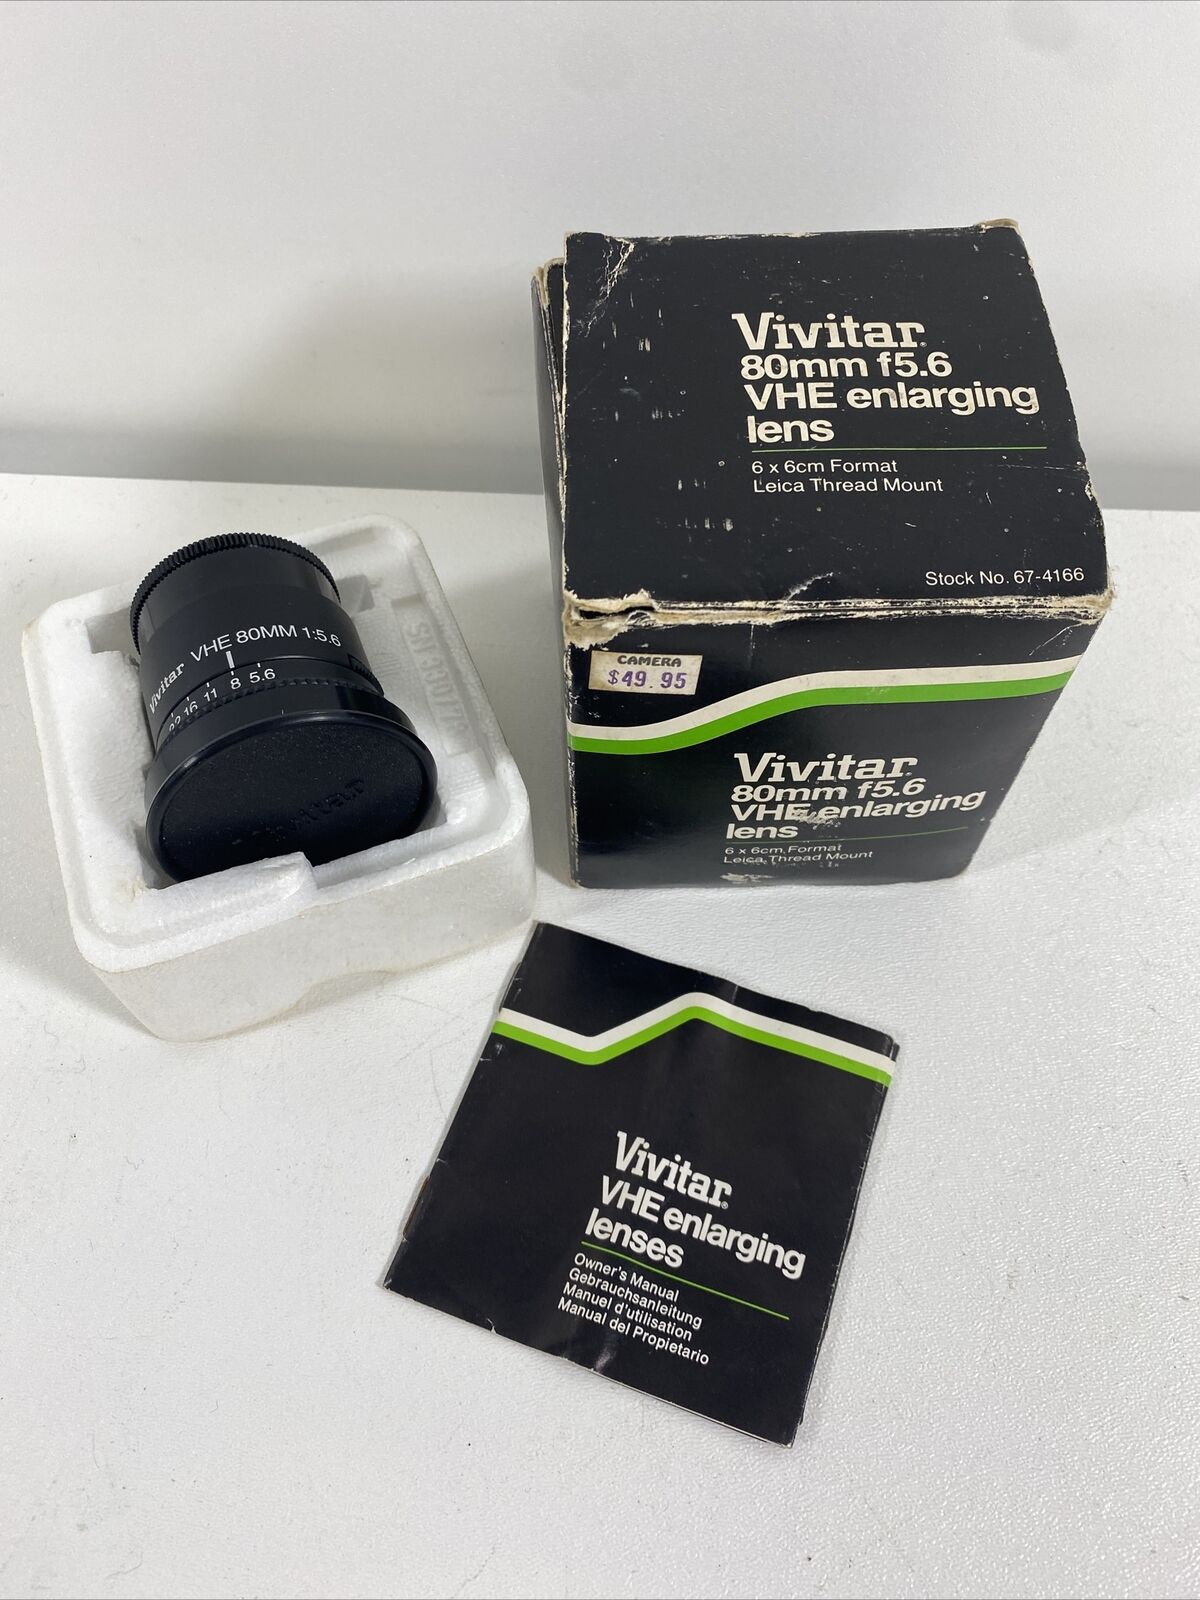 Vivitar VHE 80mm f5.6 Enlarging Lens With Box